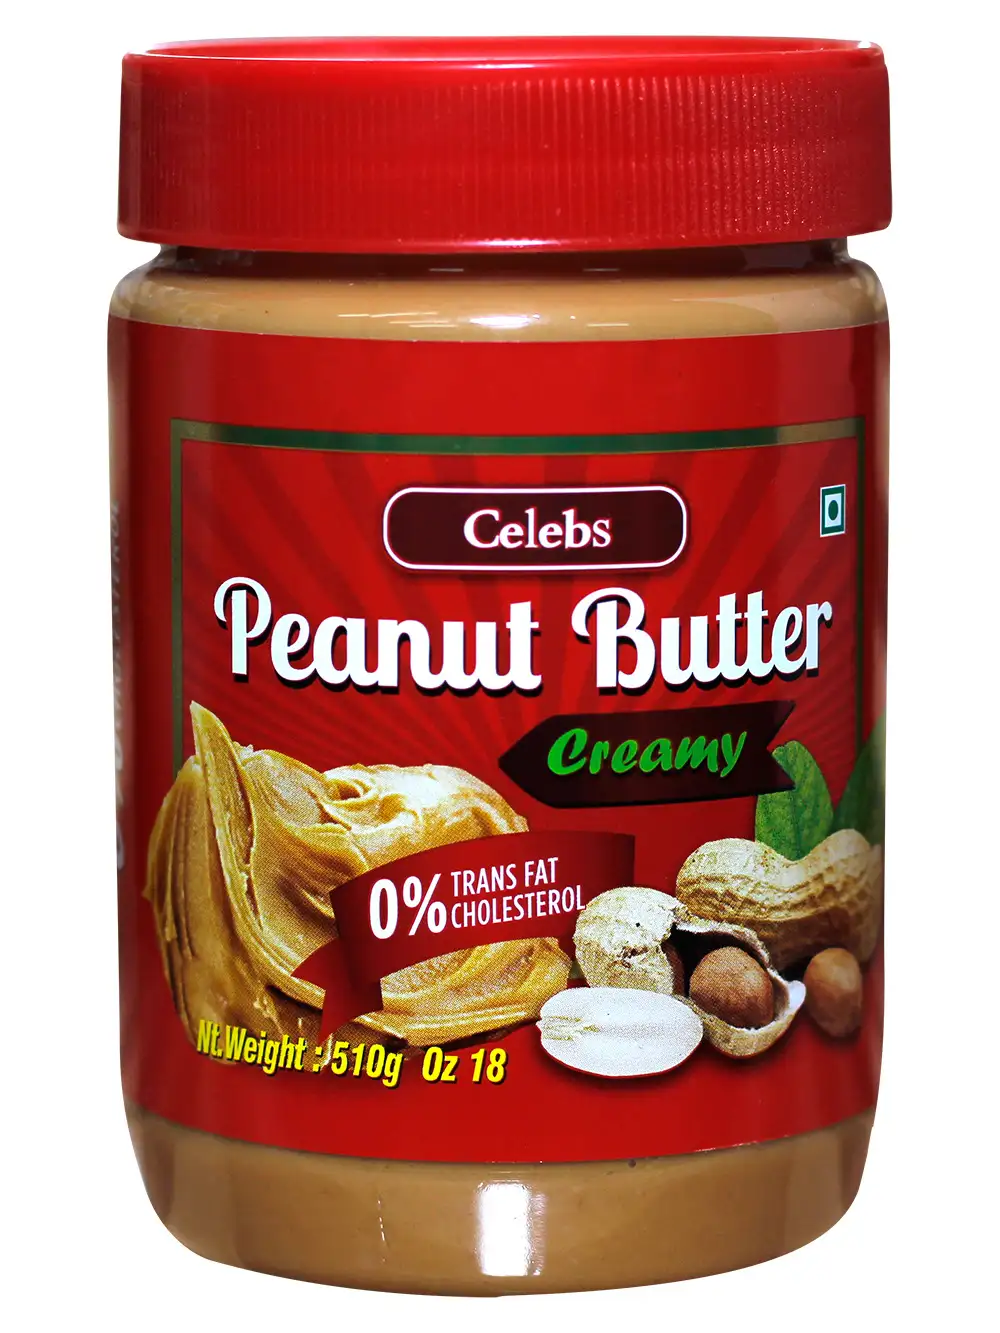 Celebs peanut butter